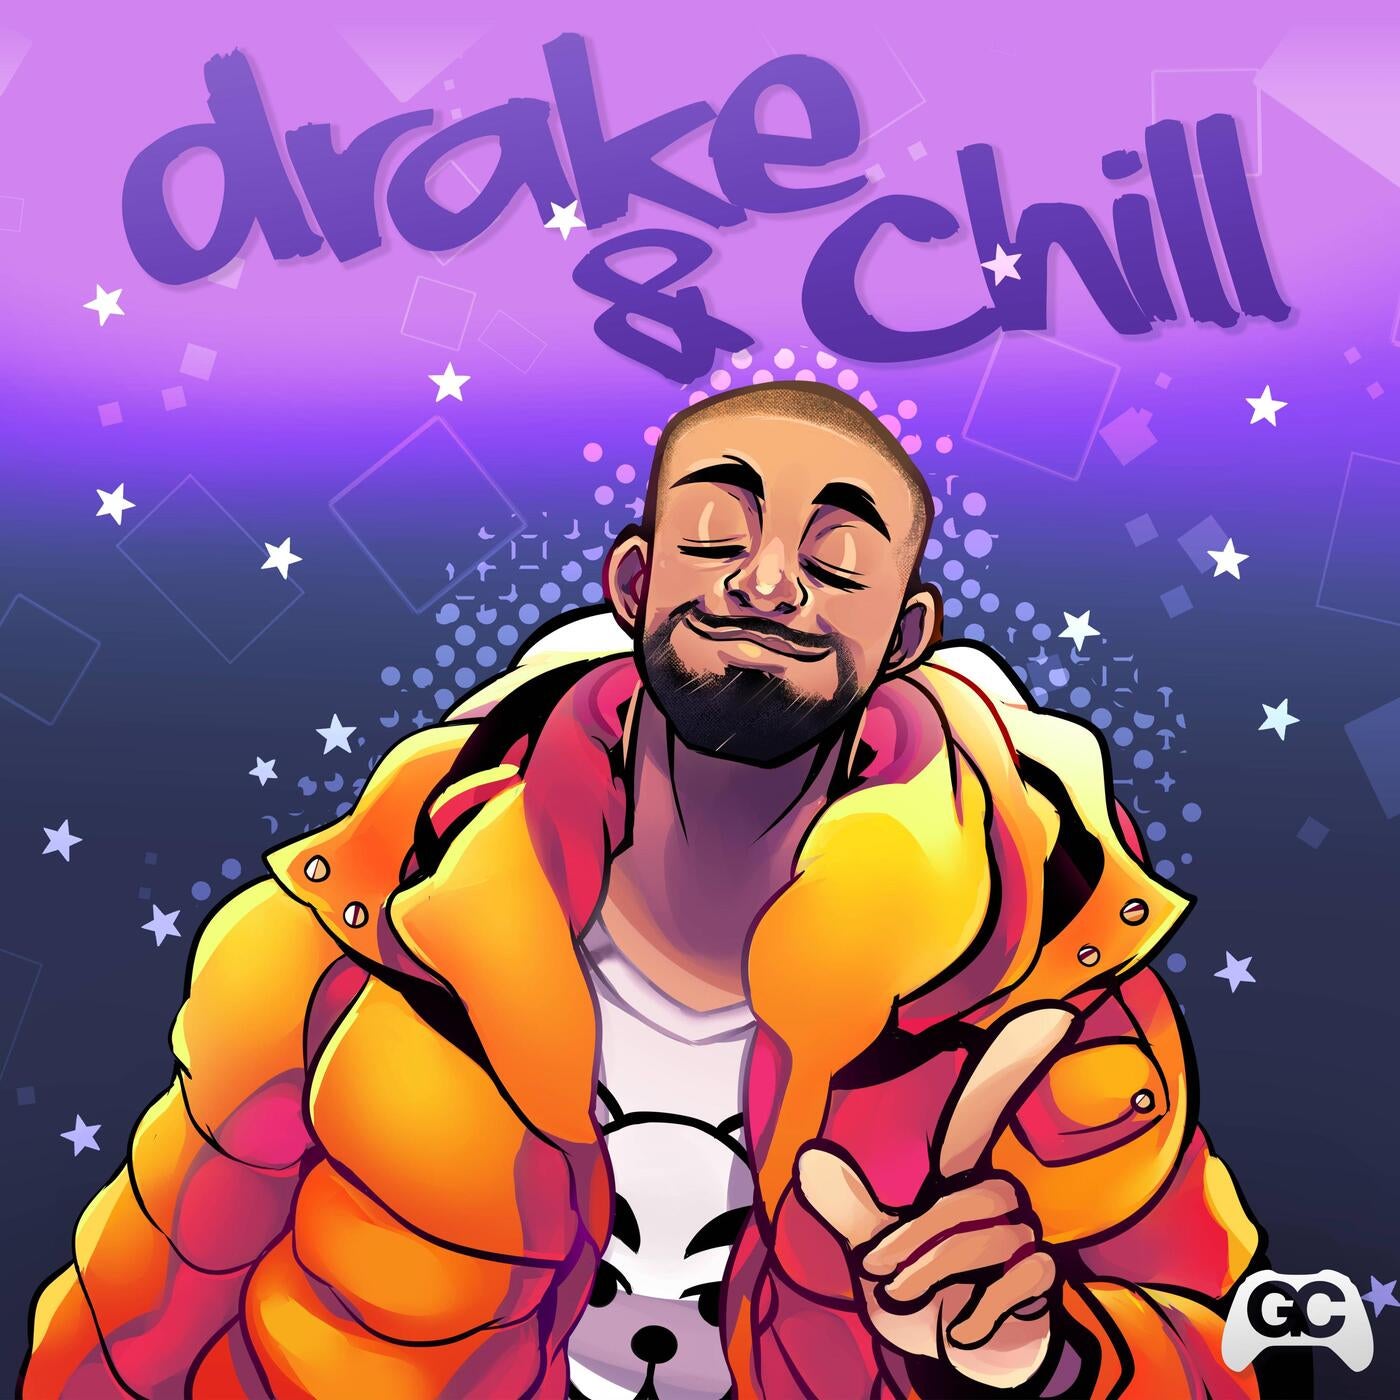 Drake & Chill